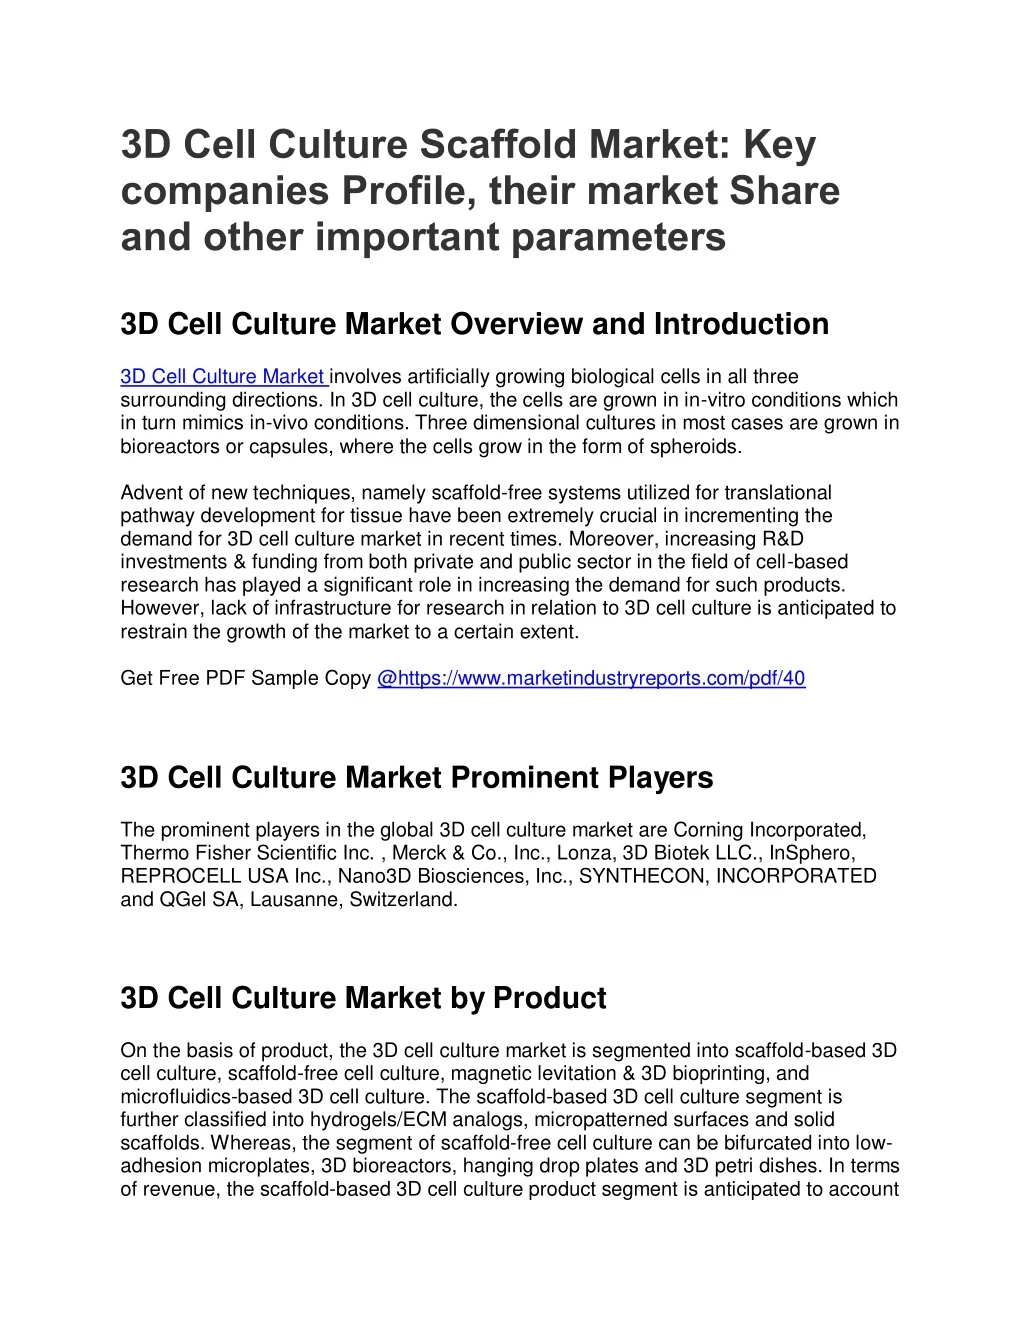 3d cell culture scaffold market key companies